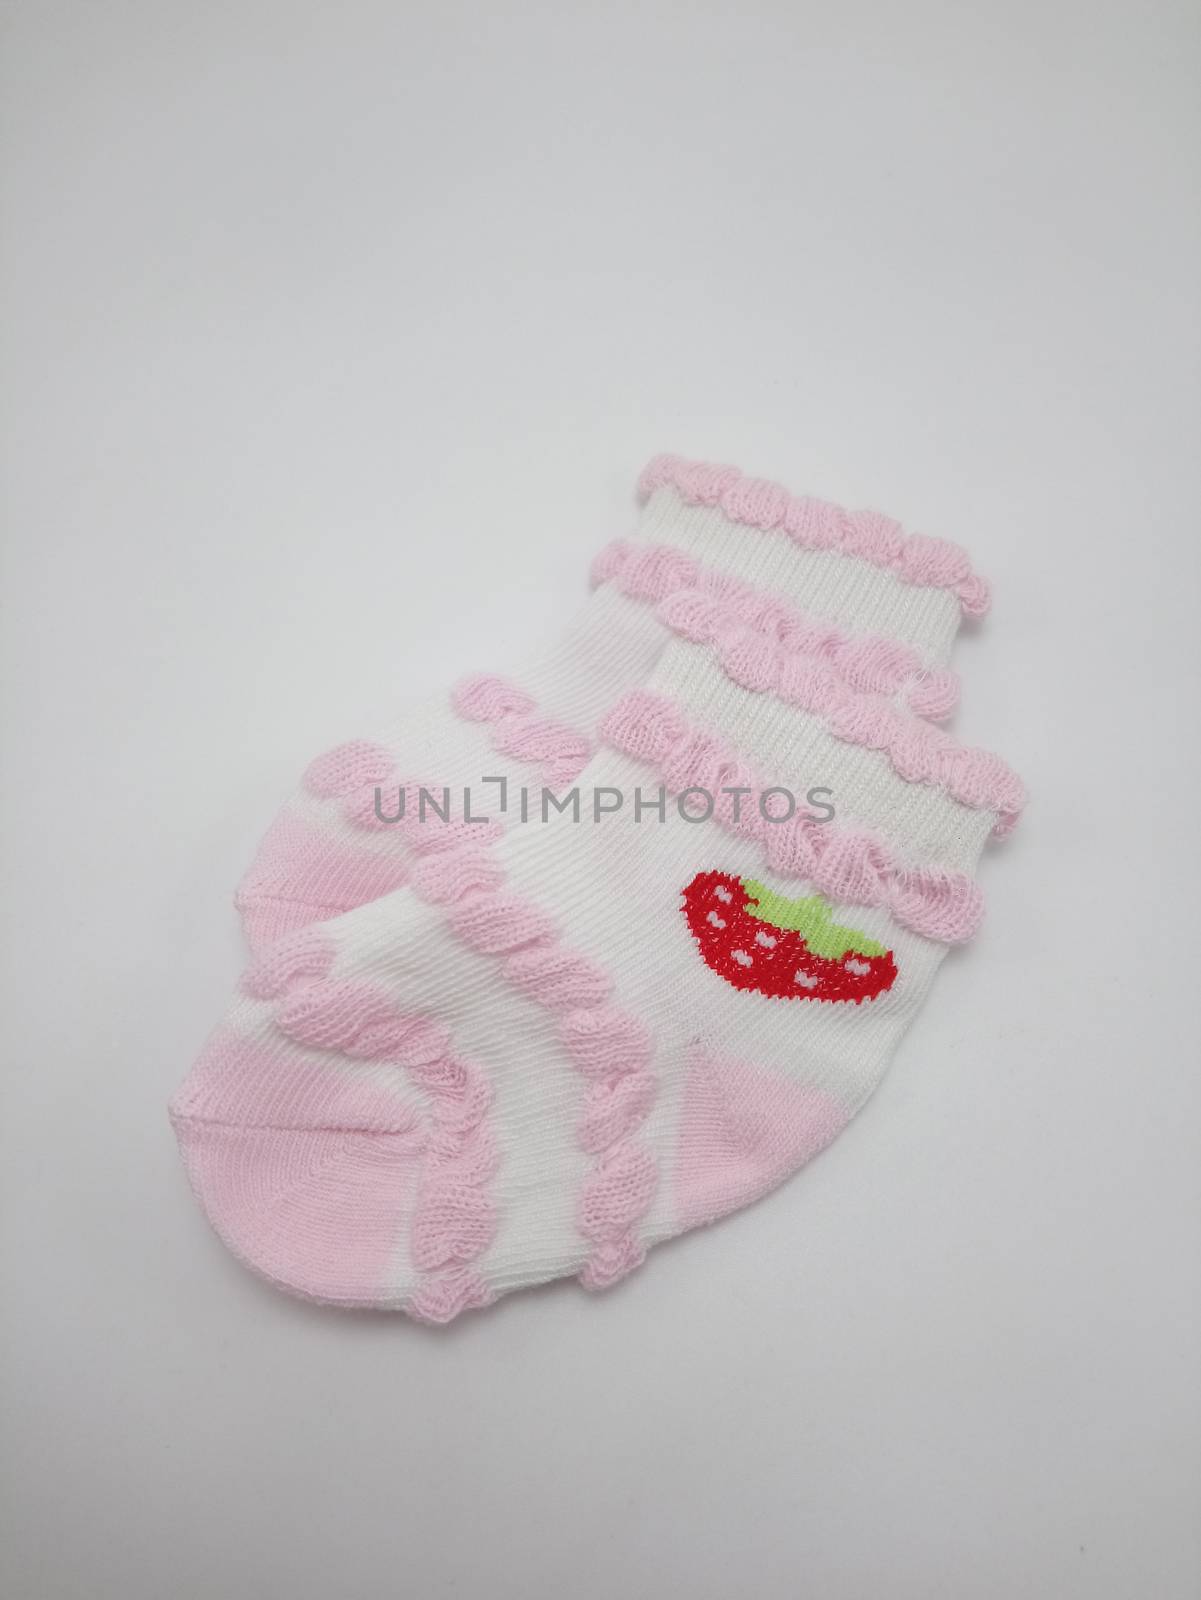 Antibacterial baby socks strawberry design print by imwaltersy